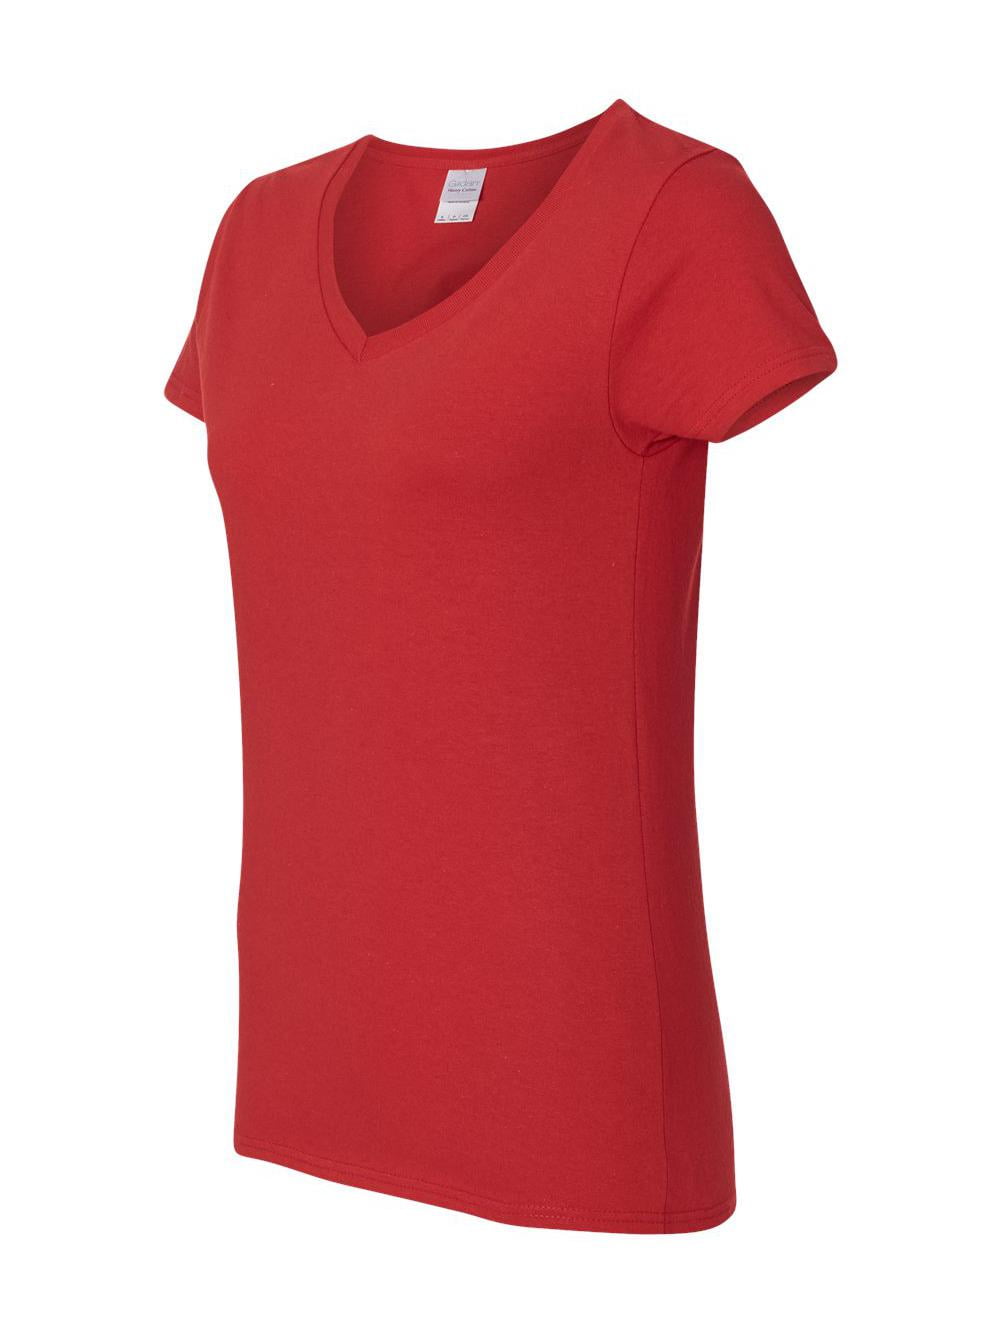 Gildan - Heavy Cotton Women's V-Neck T-Shirt - 5V00L - Red - Size: L